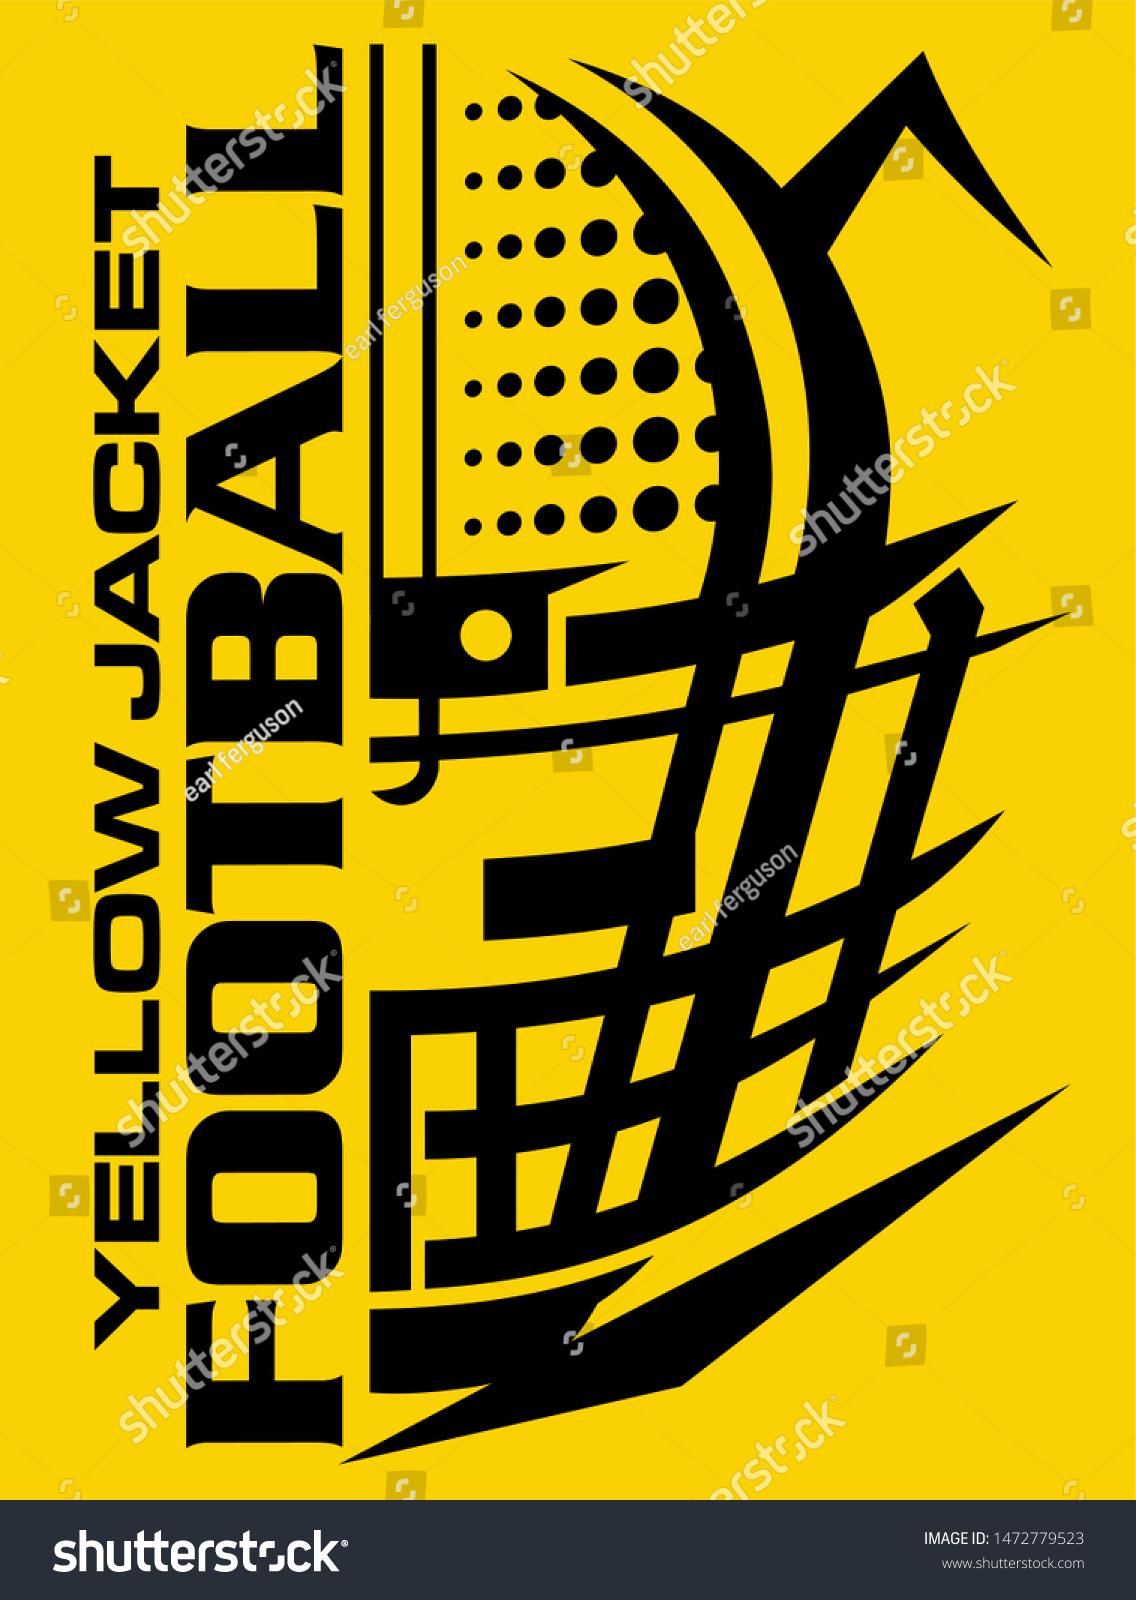 Download Yellow Jacket Football Team Design Half Stock Vector Royalty Free 1472779523 PSD Mockup Templates